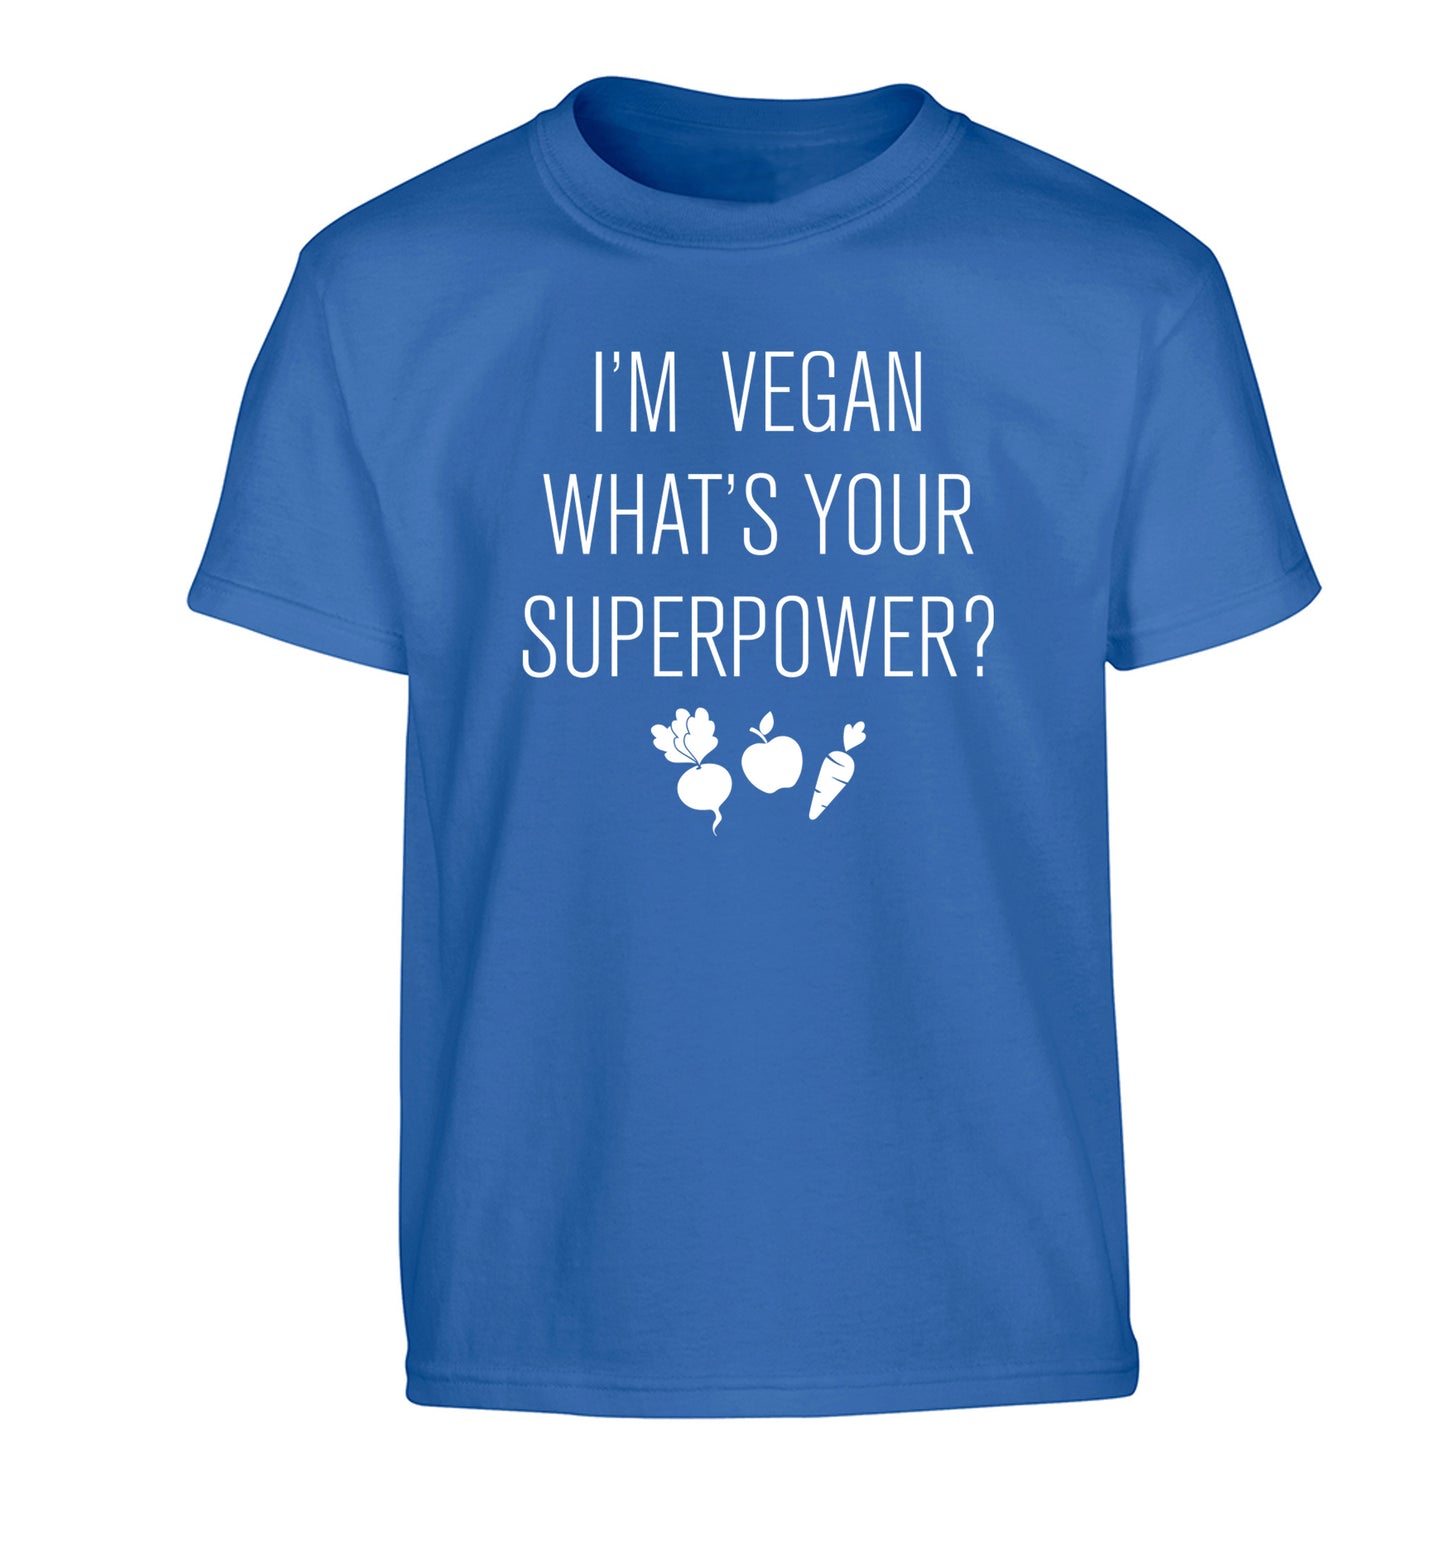 I'm Vegan What's Your Superpower? Children's blue Tshirt 12-13 Years